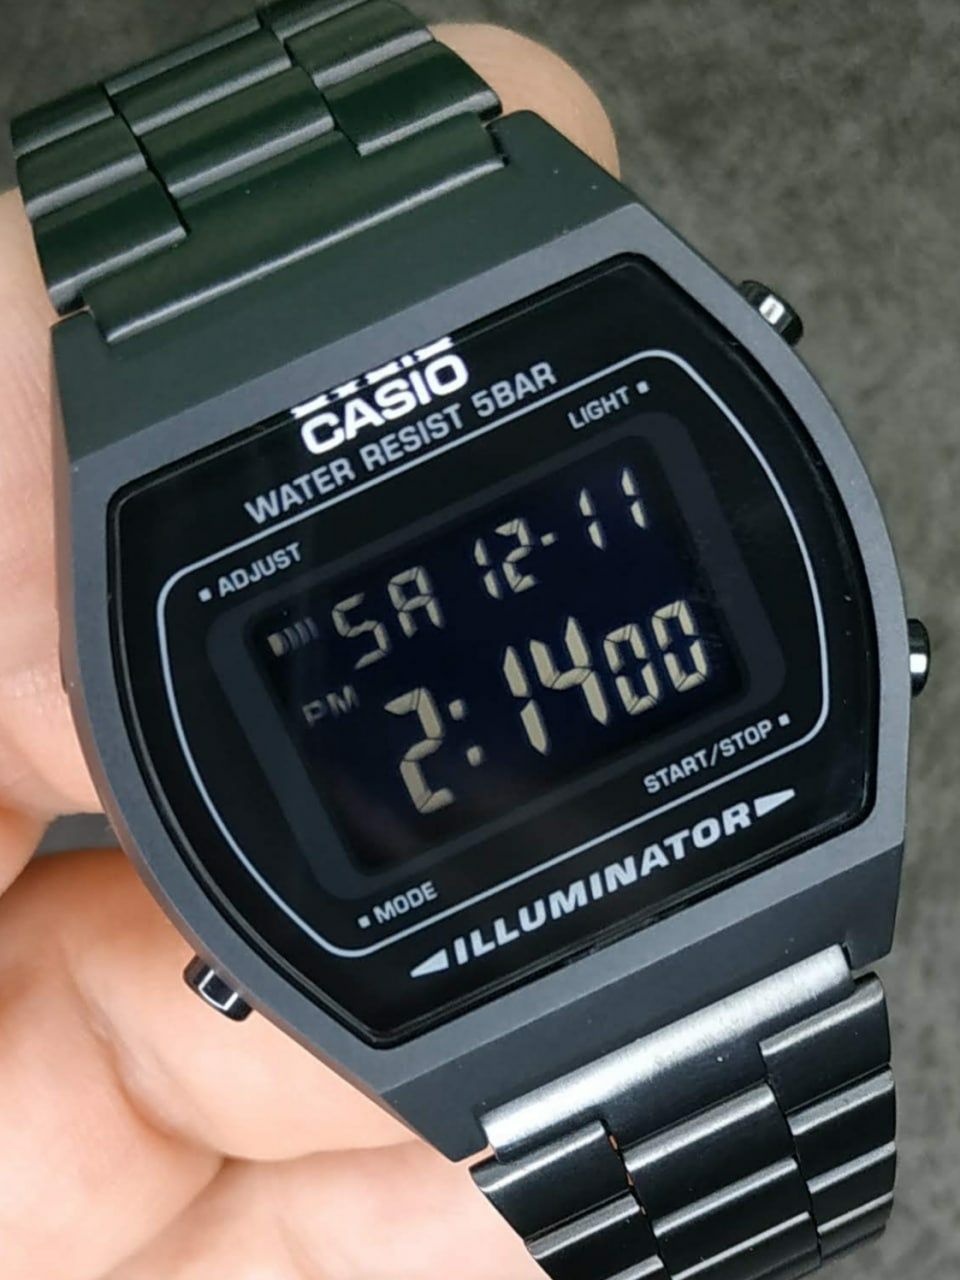 Годинник Casio B640WB-1AEF Оригінал Гарантія Часы мужские Касио